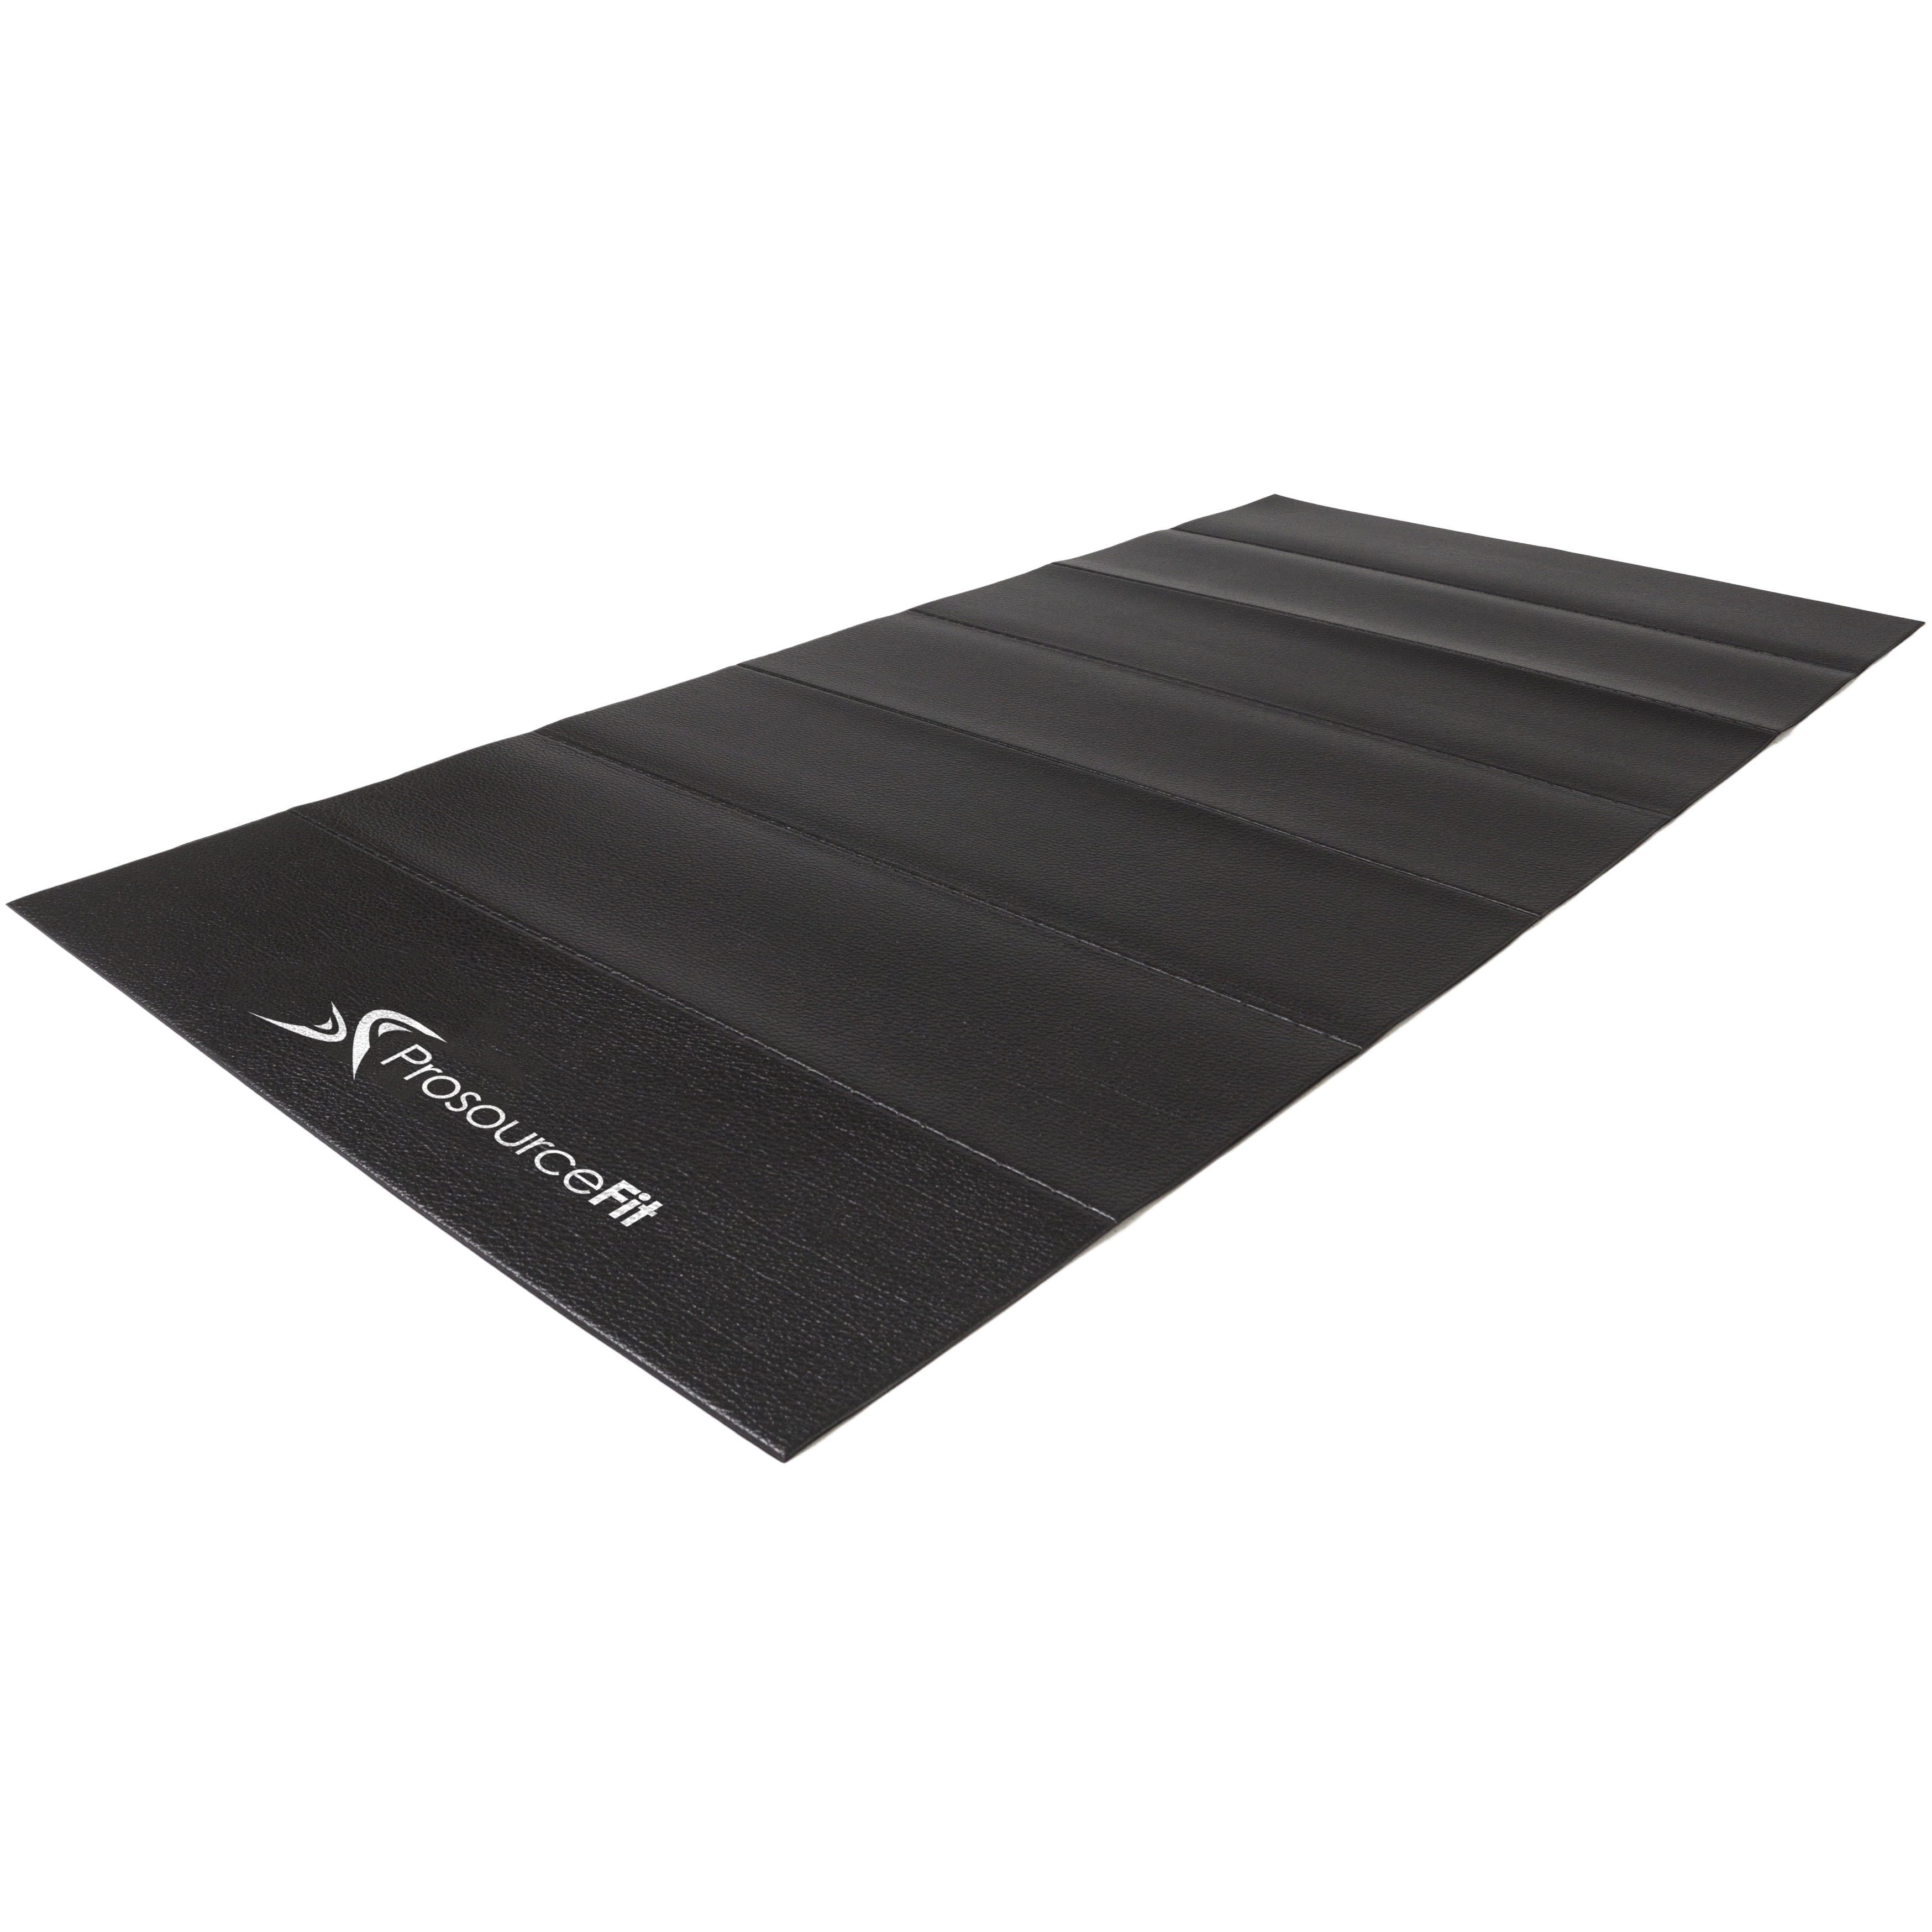 6pcs Treadmill Mat Equipment Mat for Hardwood Floors and Carpet Protection UK 